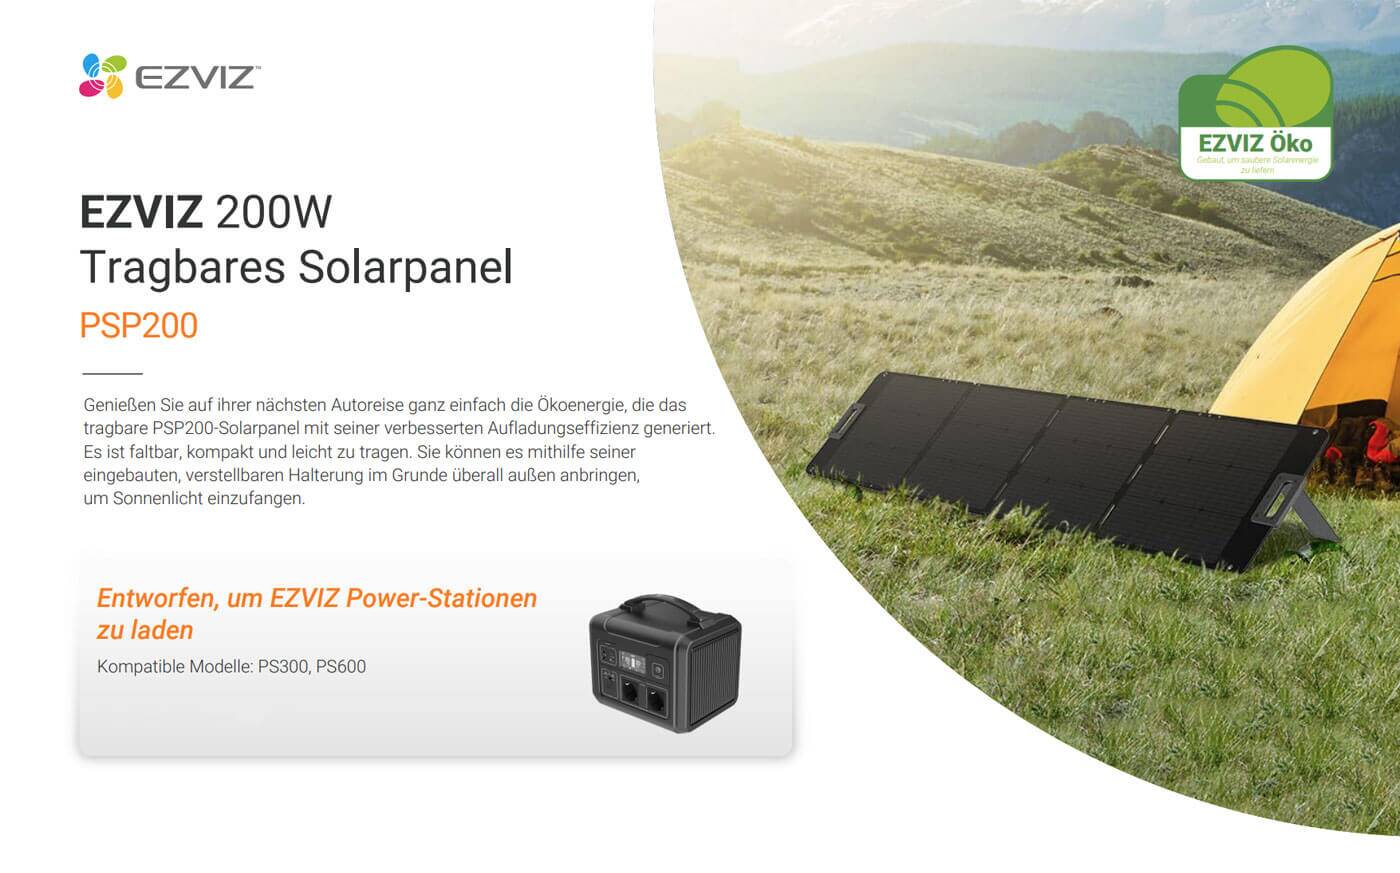 EZVIZ 200W tragbares Solarpanel